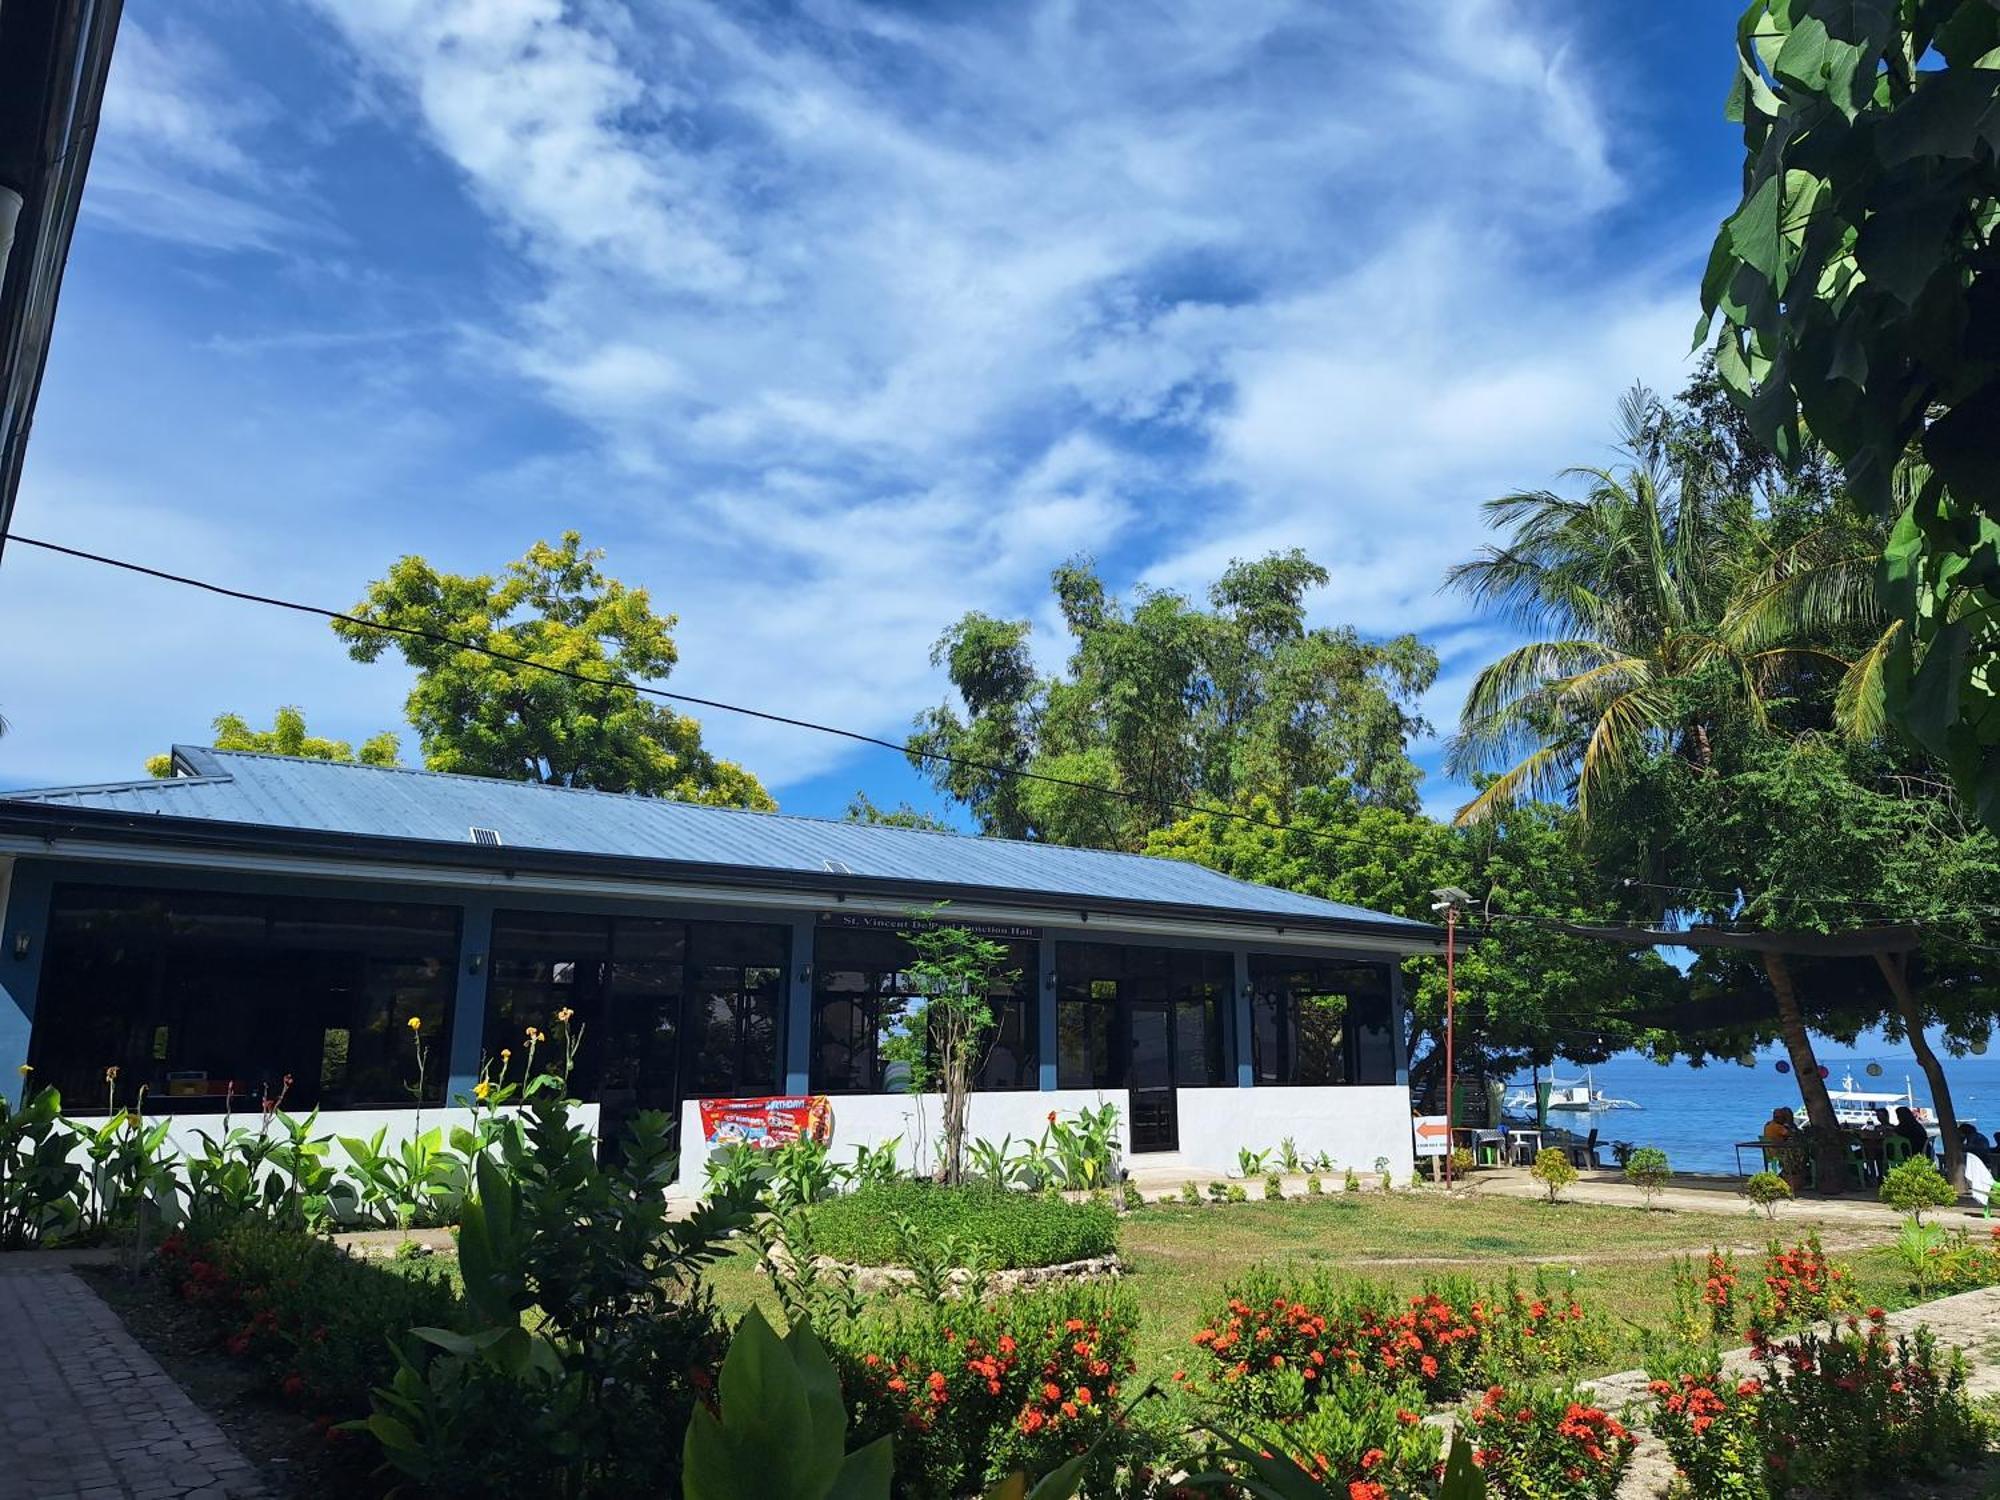 Island Front - Bangcogon Resort And Restaurant Oslob Exterior photo